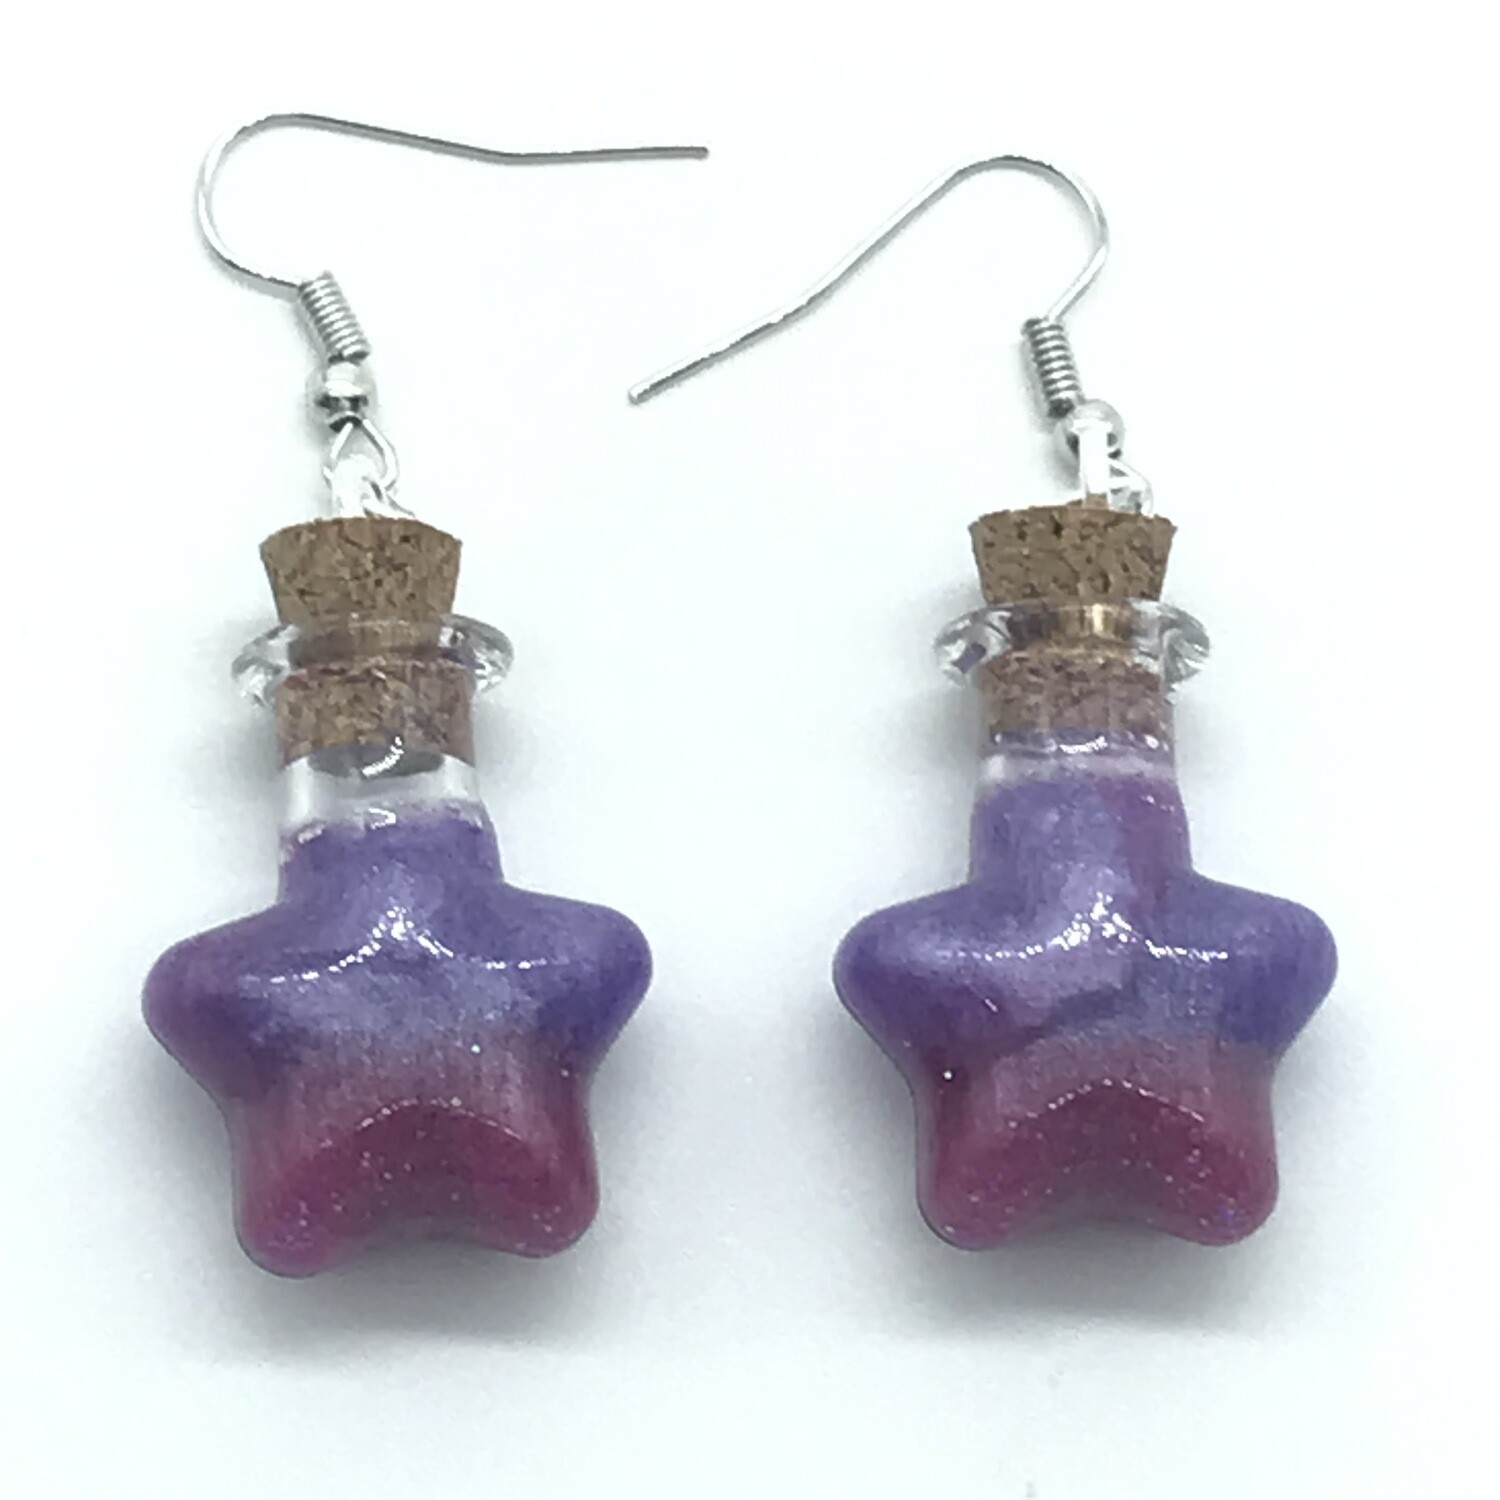 Potion Earrings - Fuchsia and lavender, star bottle